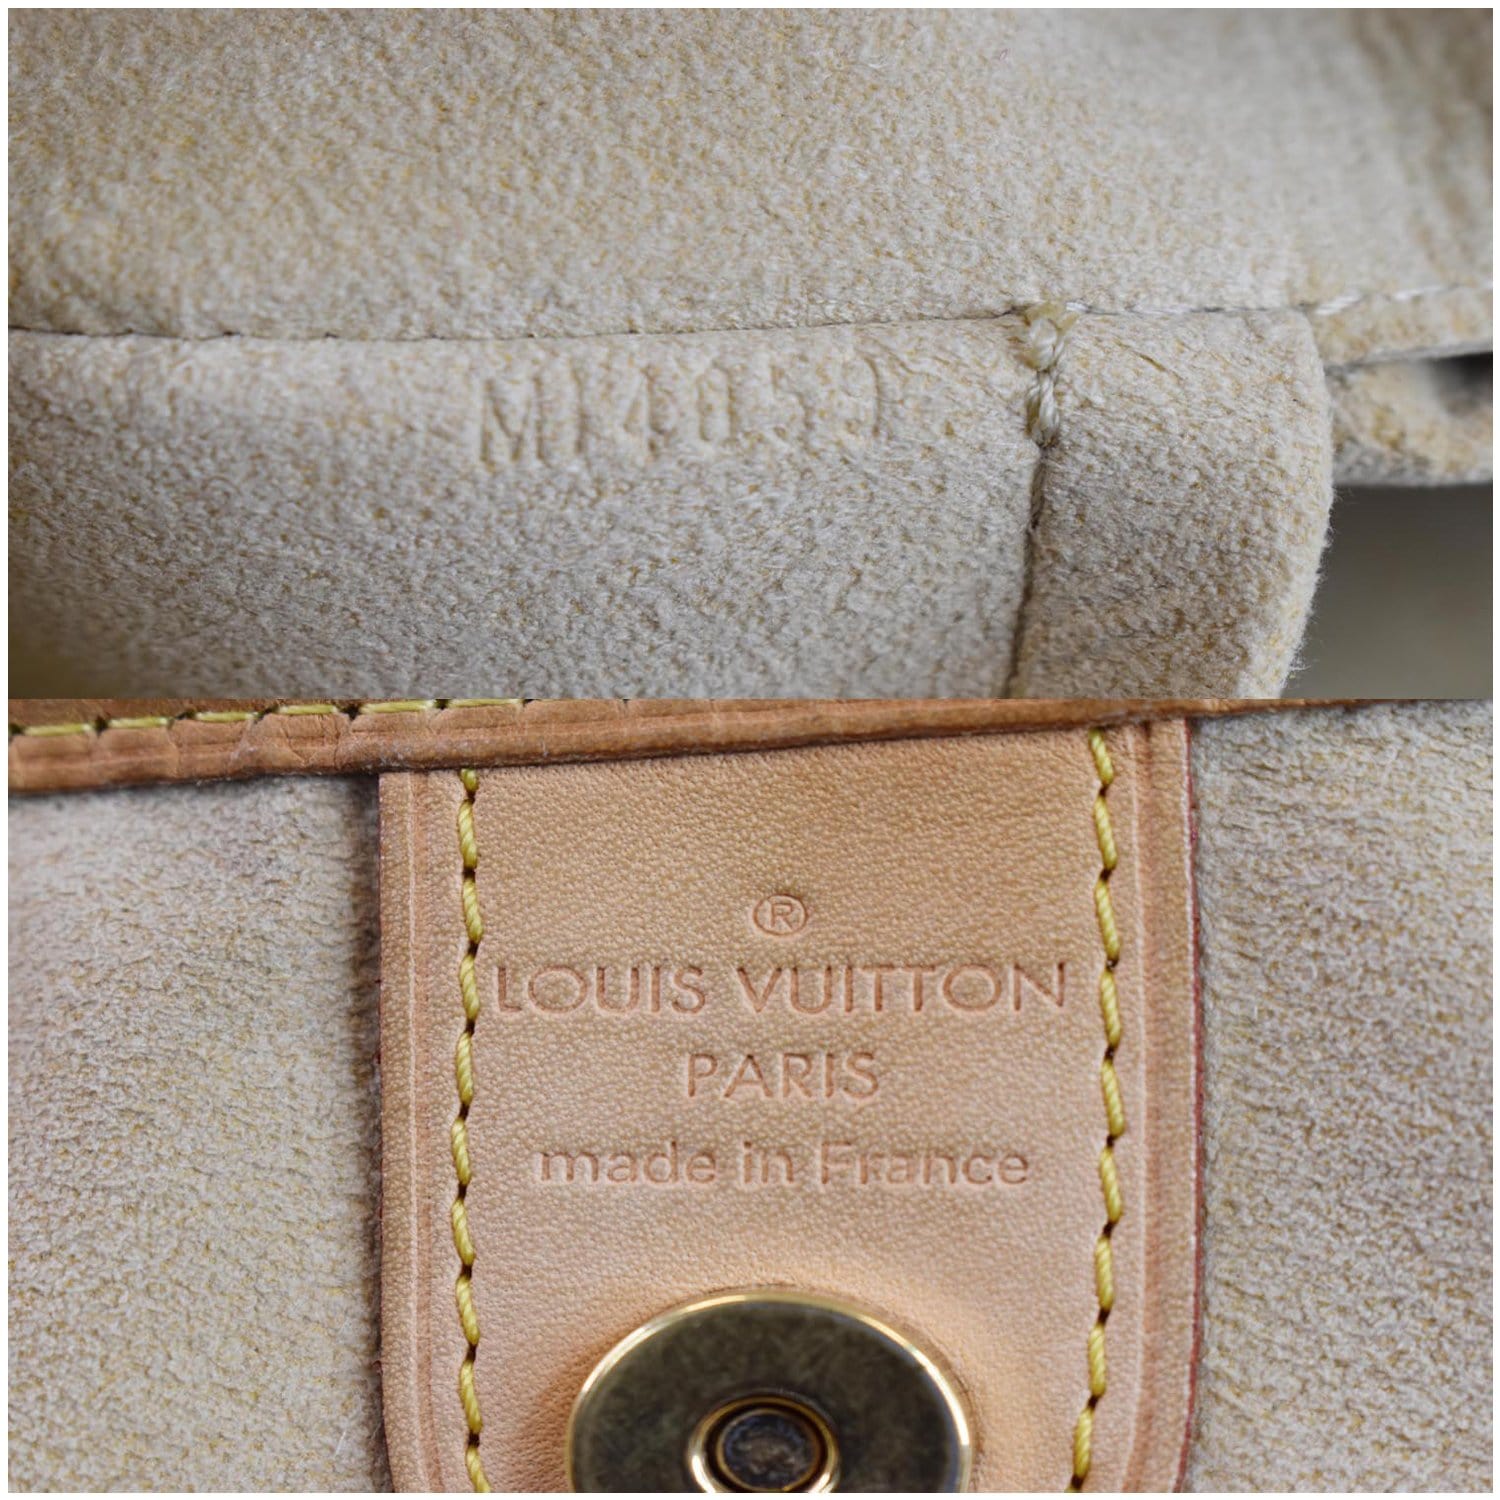 Louis Vuitton Galliera PM Damier Azur Handbag in Dust bag at 1stDibs  louis  vuitton galliera damier azur, louis vuitton damier azur galliera pm,  galliera pm louis vuitton